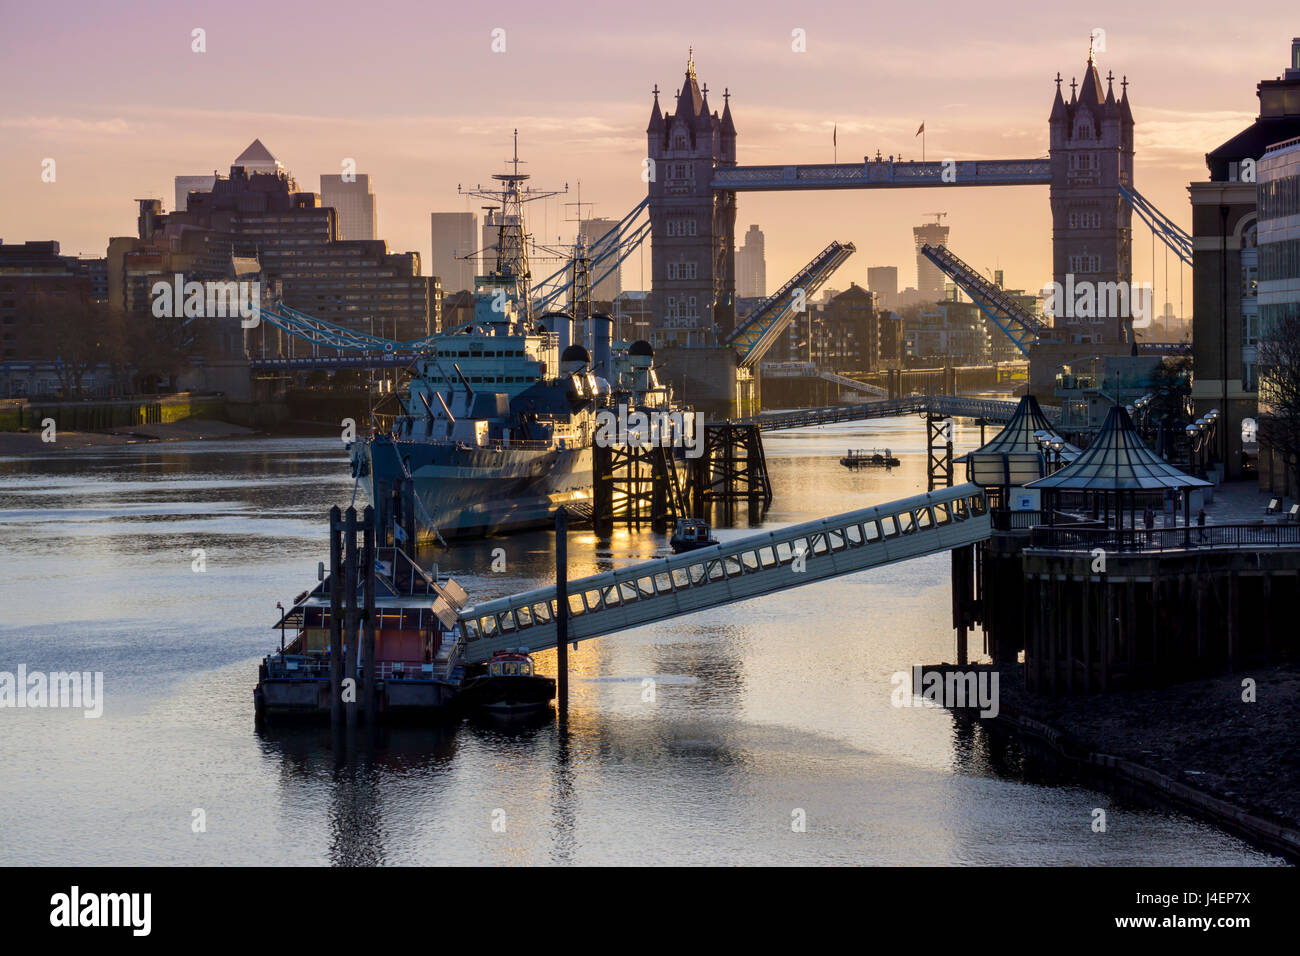 Tower Bridge raising deck with HMS Belfast on the River Thames, London, England, United Kingdom, Europe Stock Photo